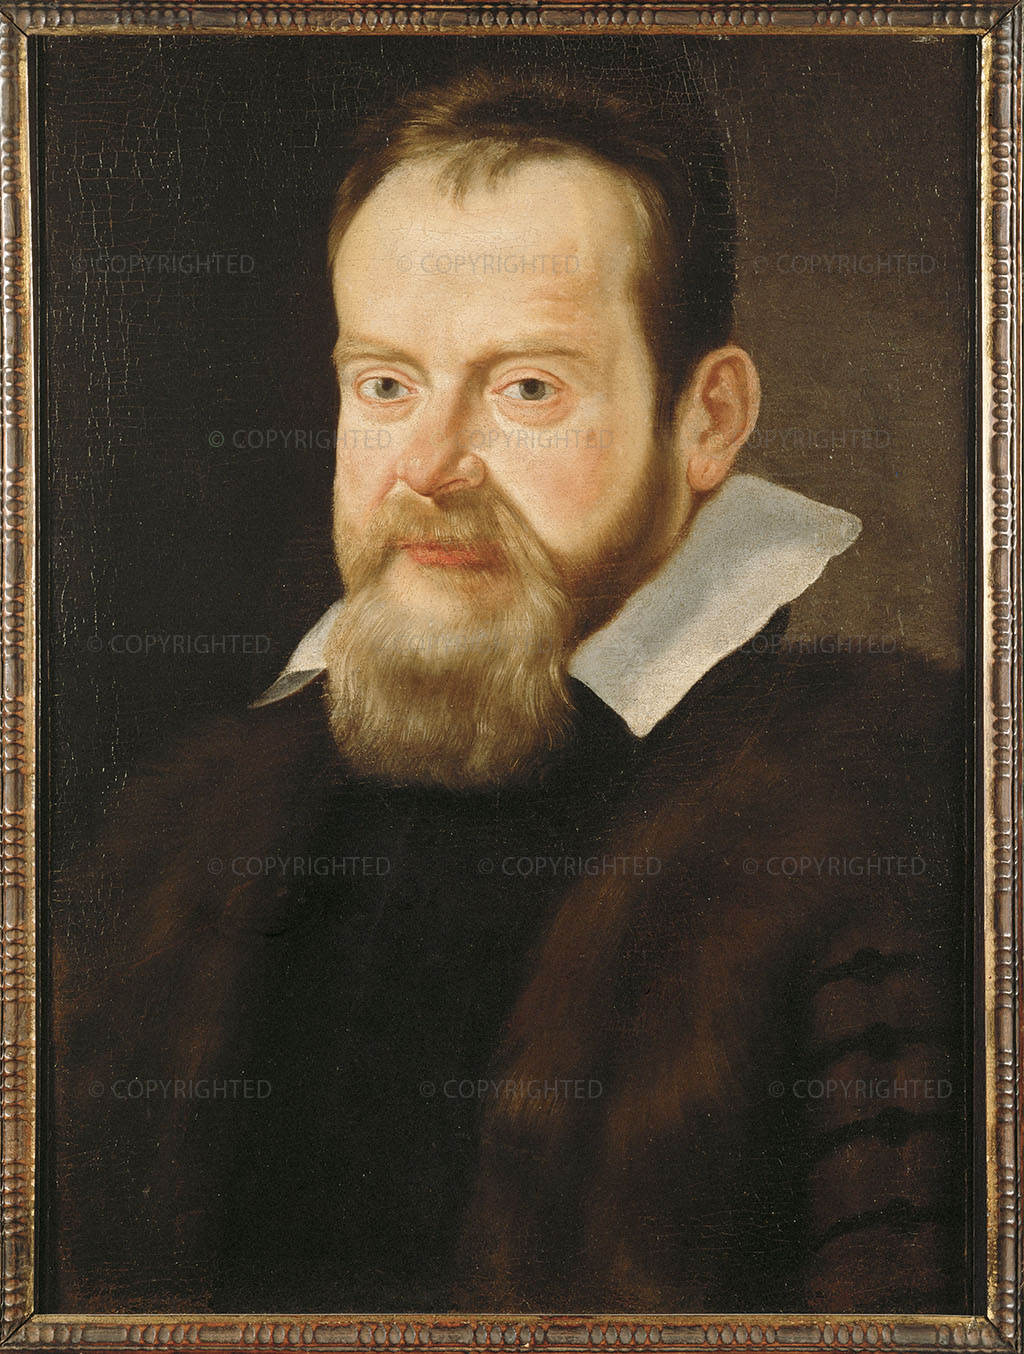 1612, Olio su tela, cm 57 x 40, Vienna, Kunsthistorisches Museum, Inv. No. GG 7976